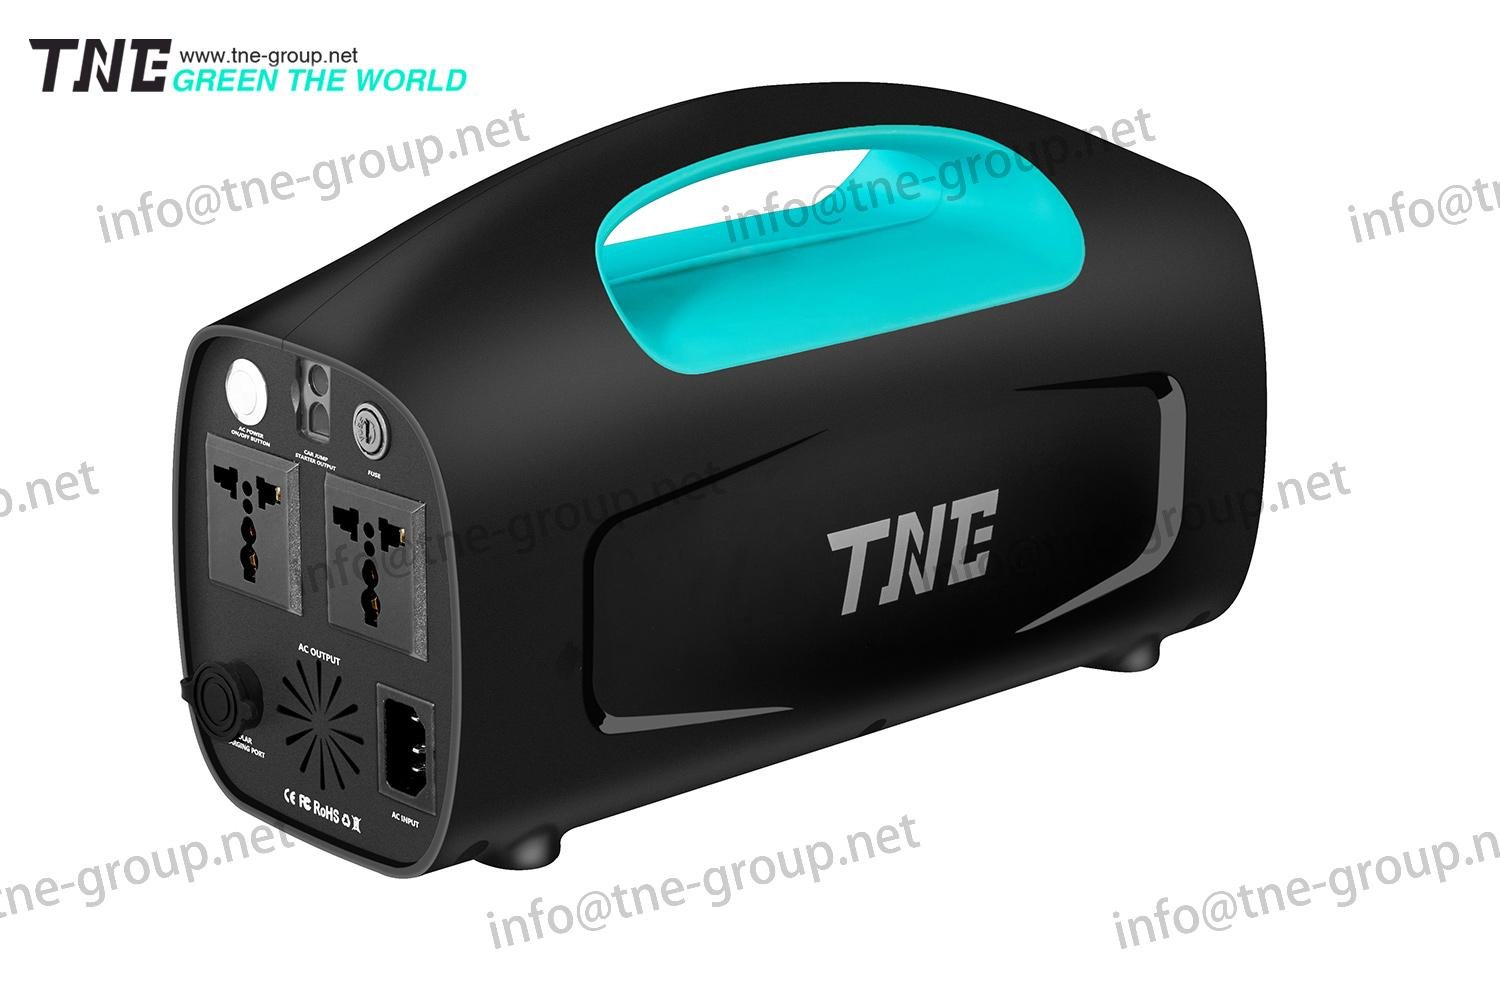 TNE solar online homage ups portable generator power bank 3